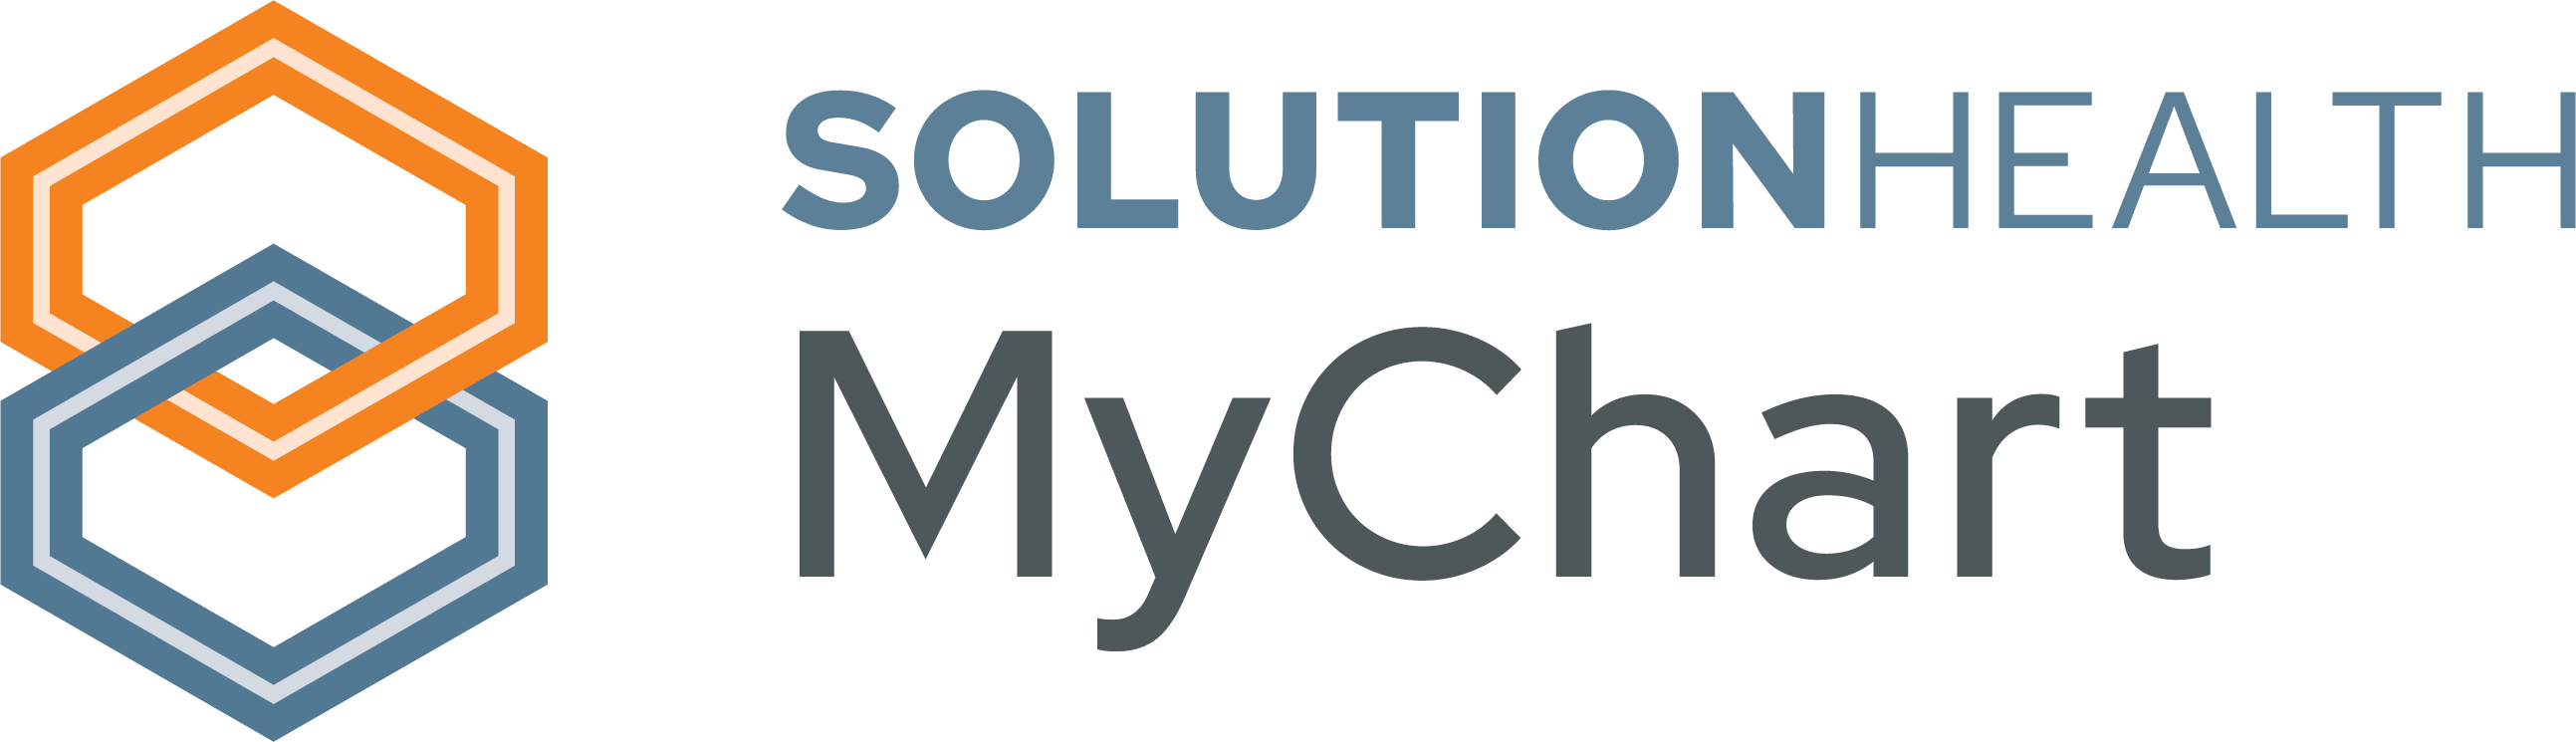 myChart-logo.png